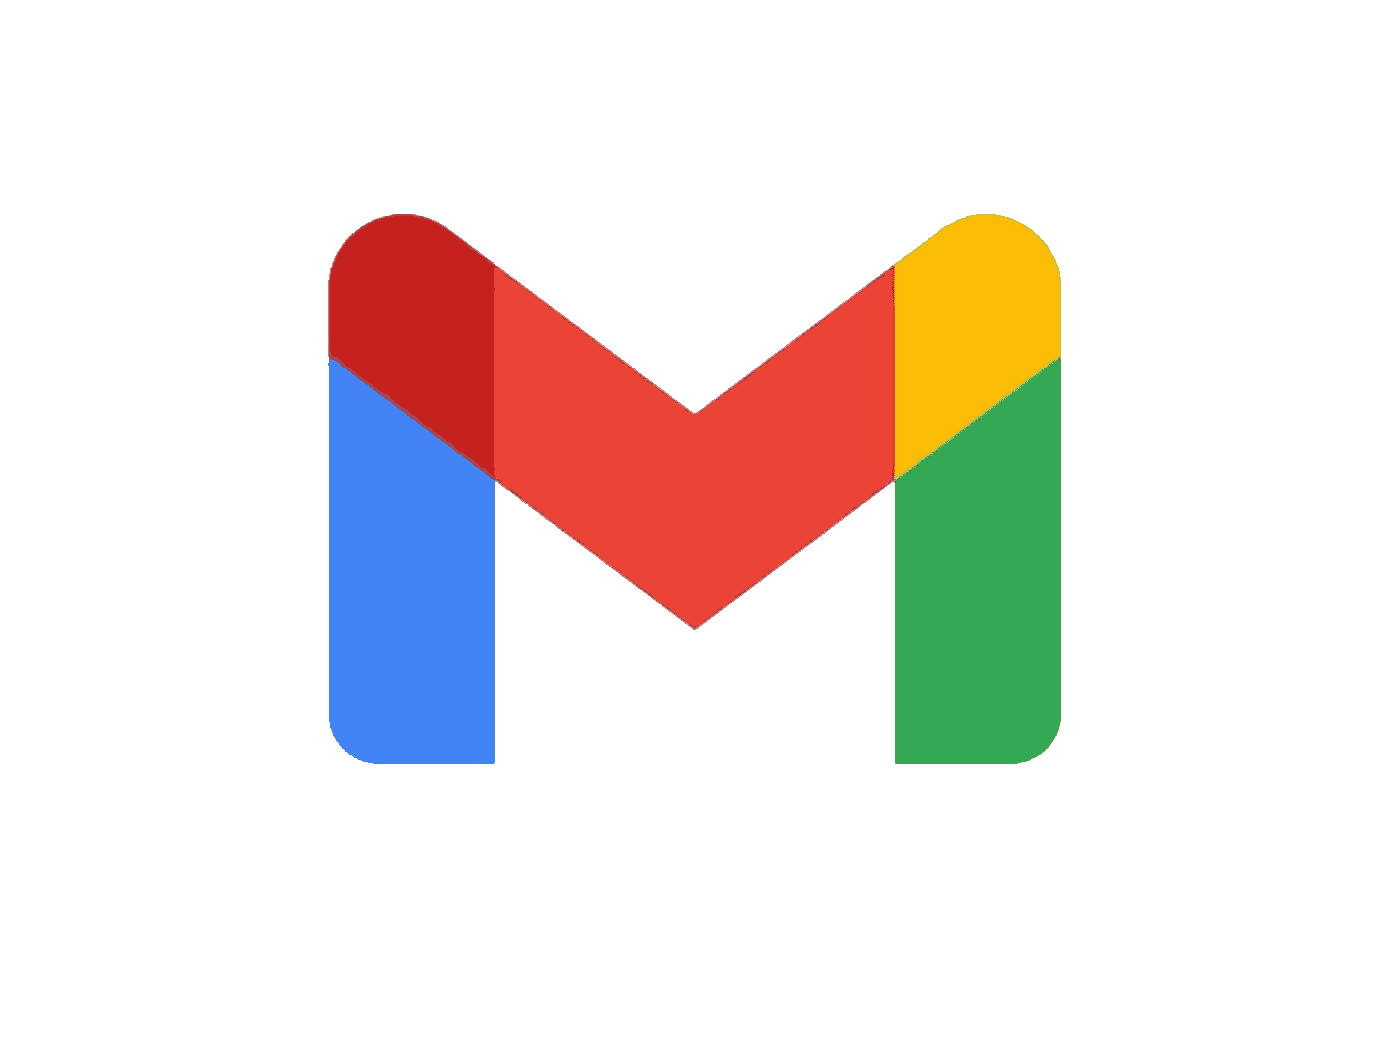 Gmail-logo